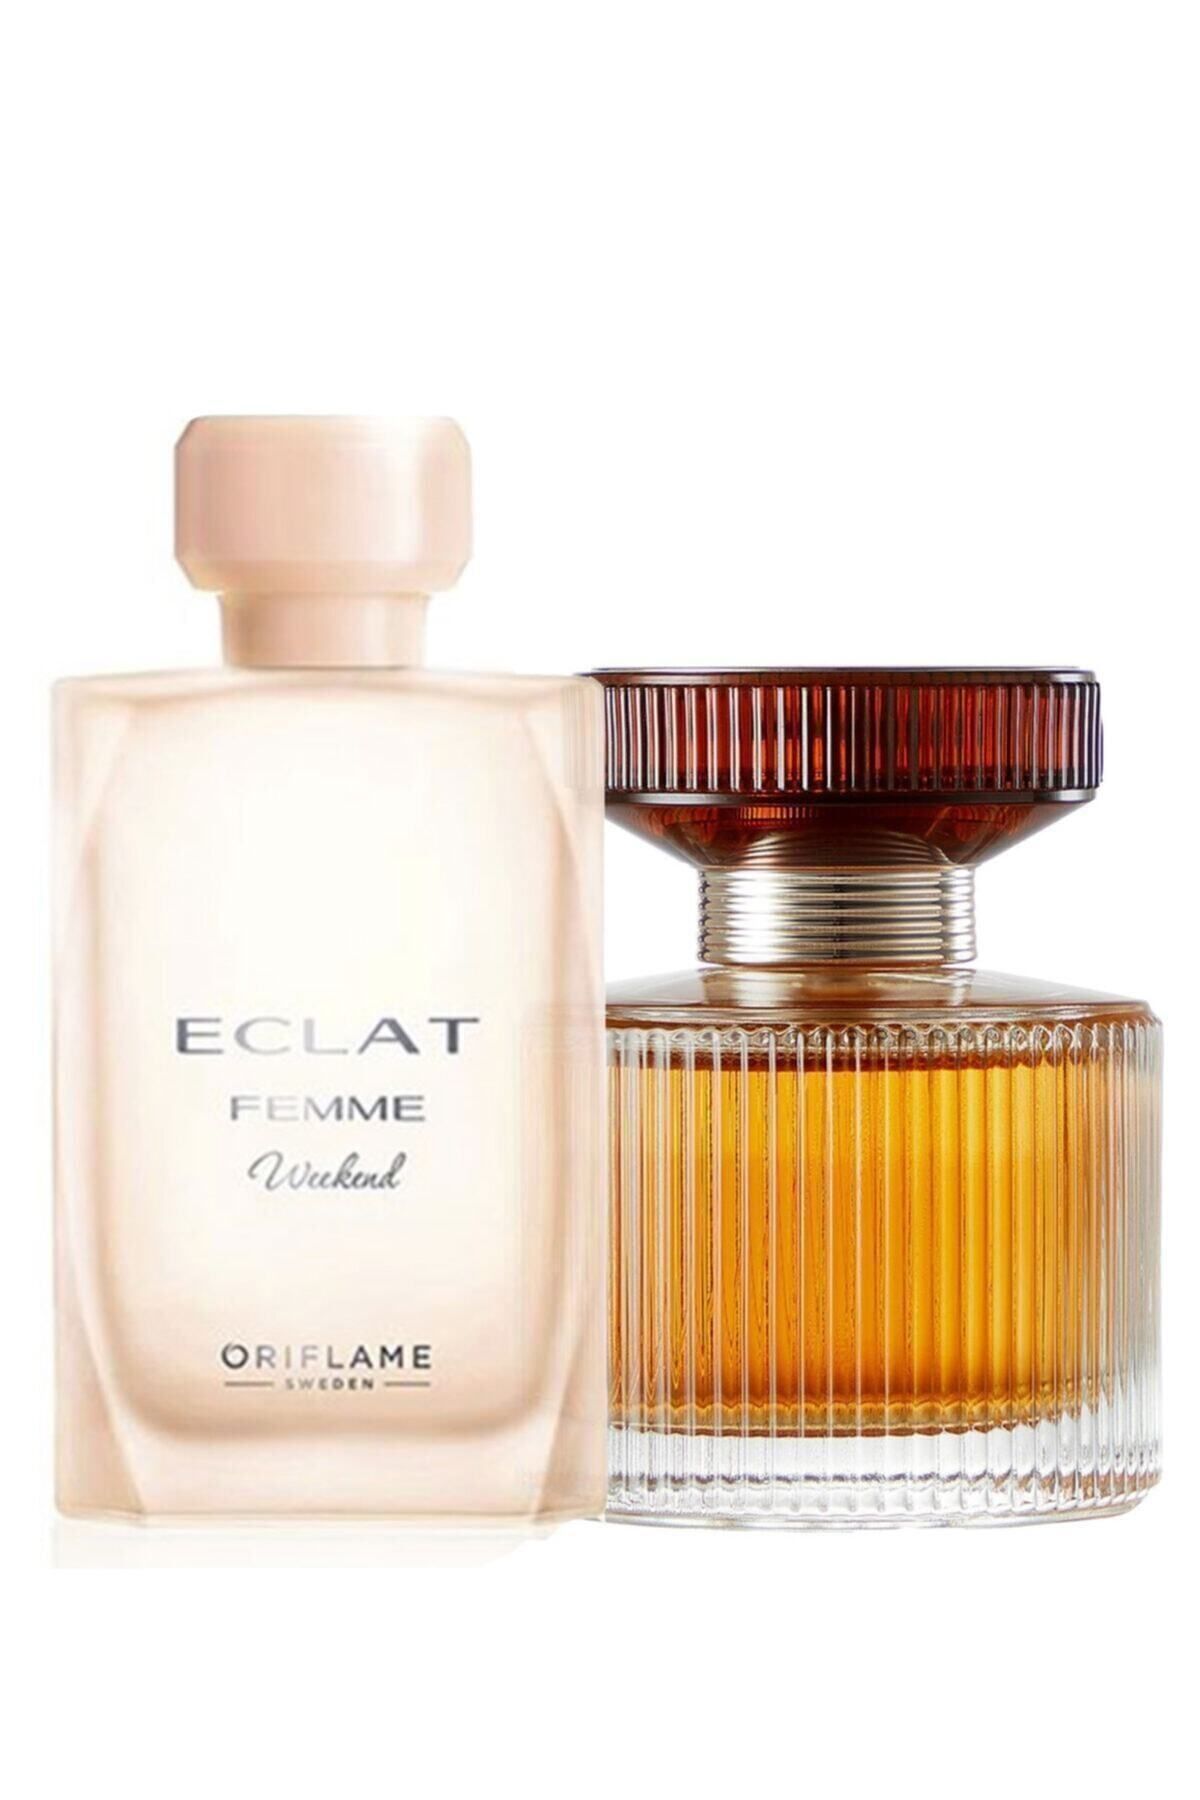 Oriflame Eclat Femme Weekend Edt 50 ml Amber Elixir Edp 50 ml Kadın Parfümü Seti ELİTKOZMETİK-TY0001